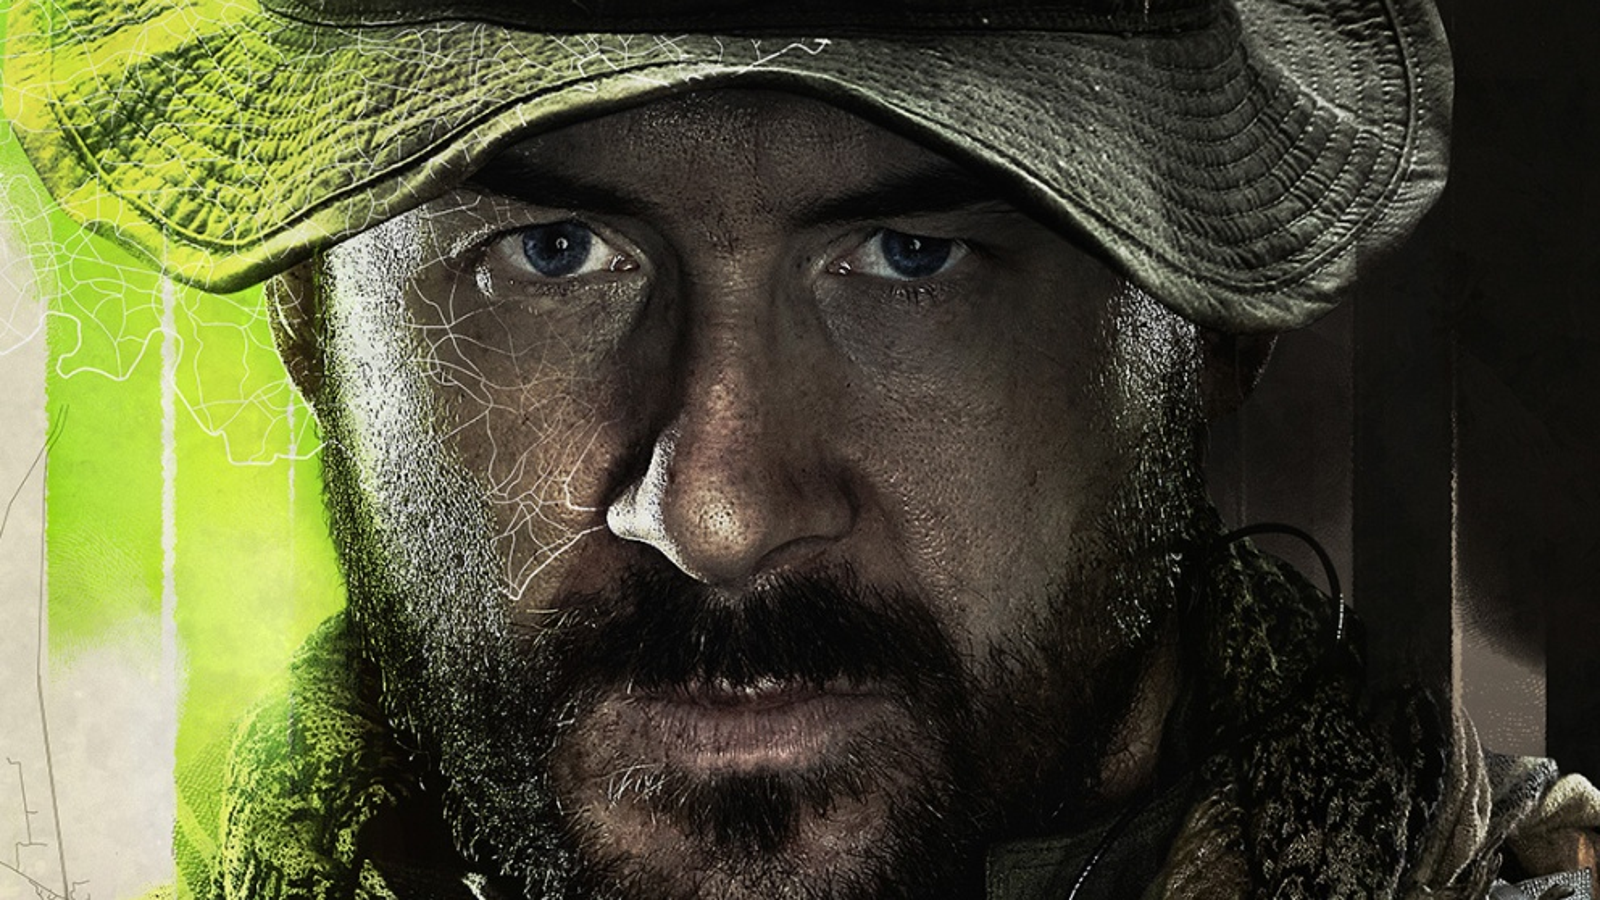 Call of Duty®: Modern Warfare® II on Steam